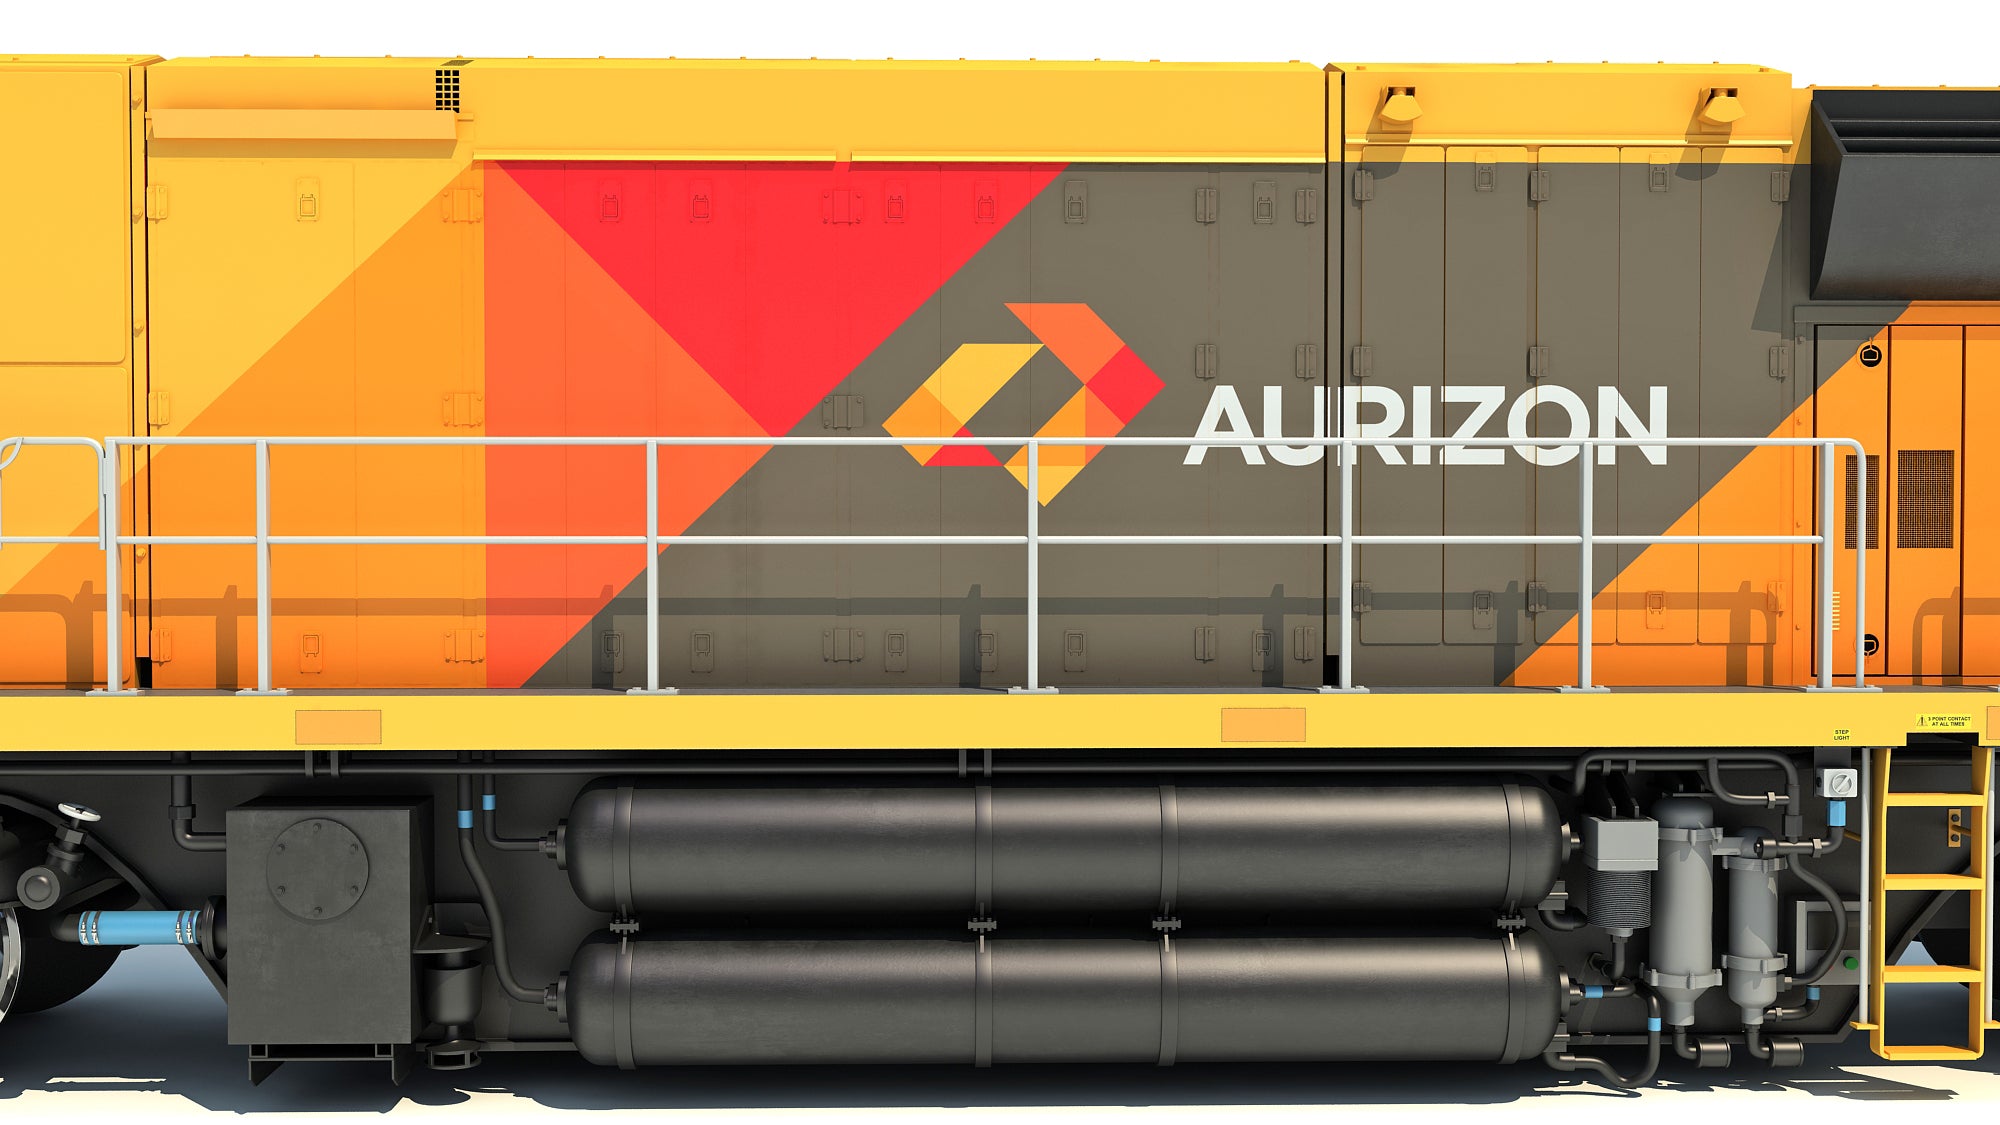 Aurizon Electric Locomotive